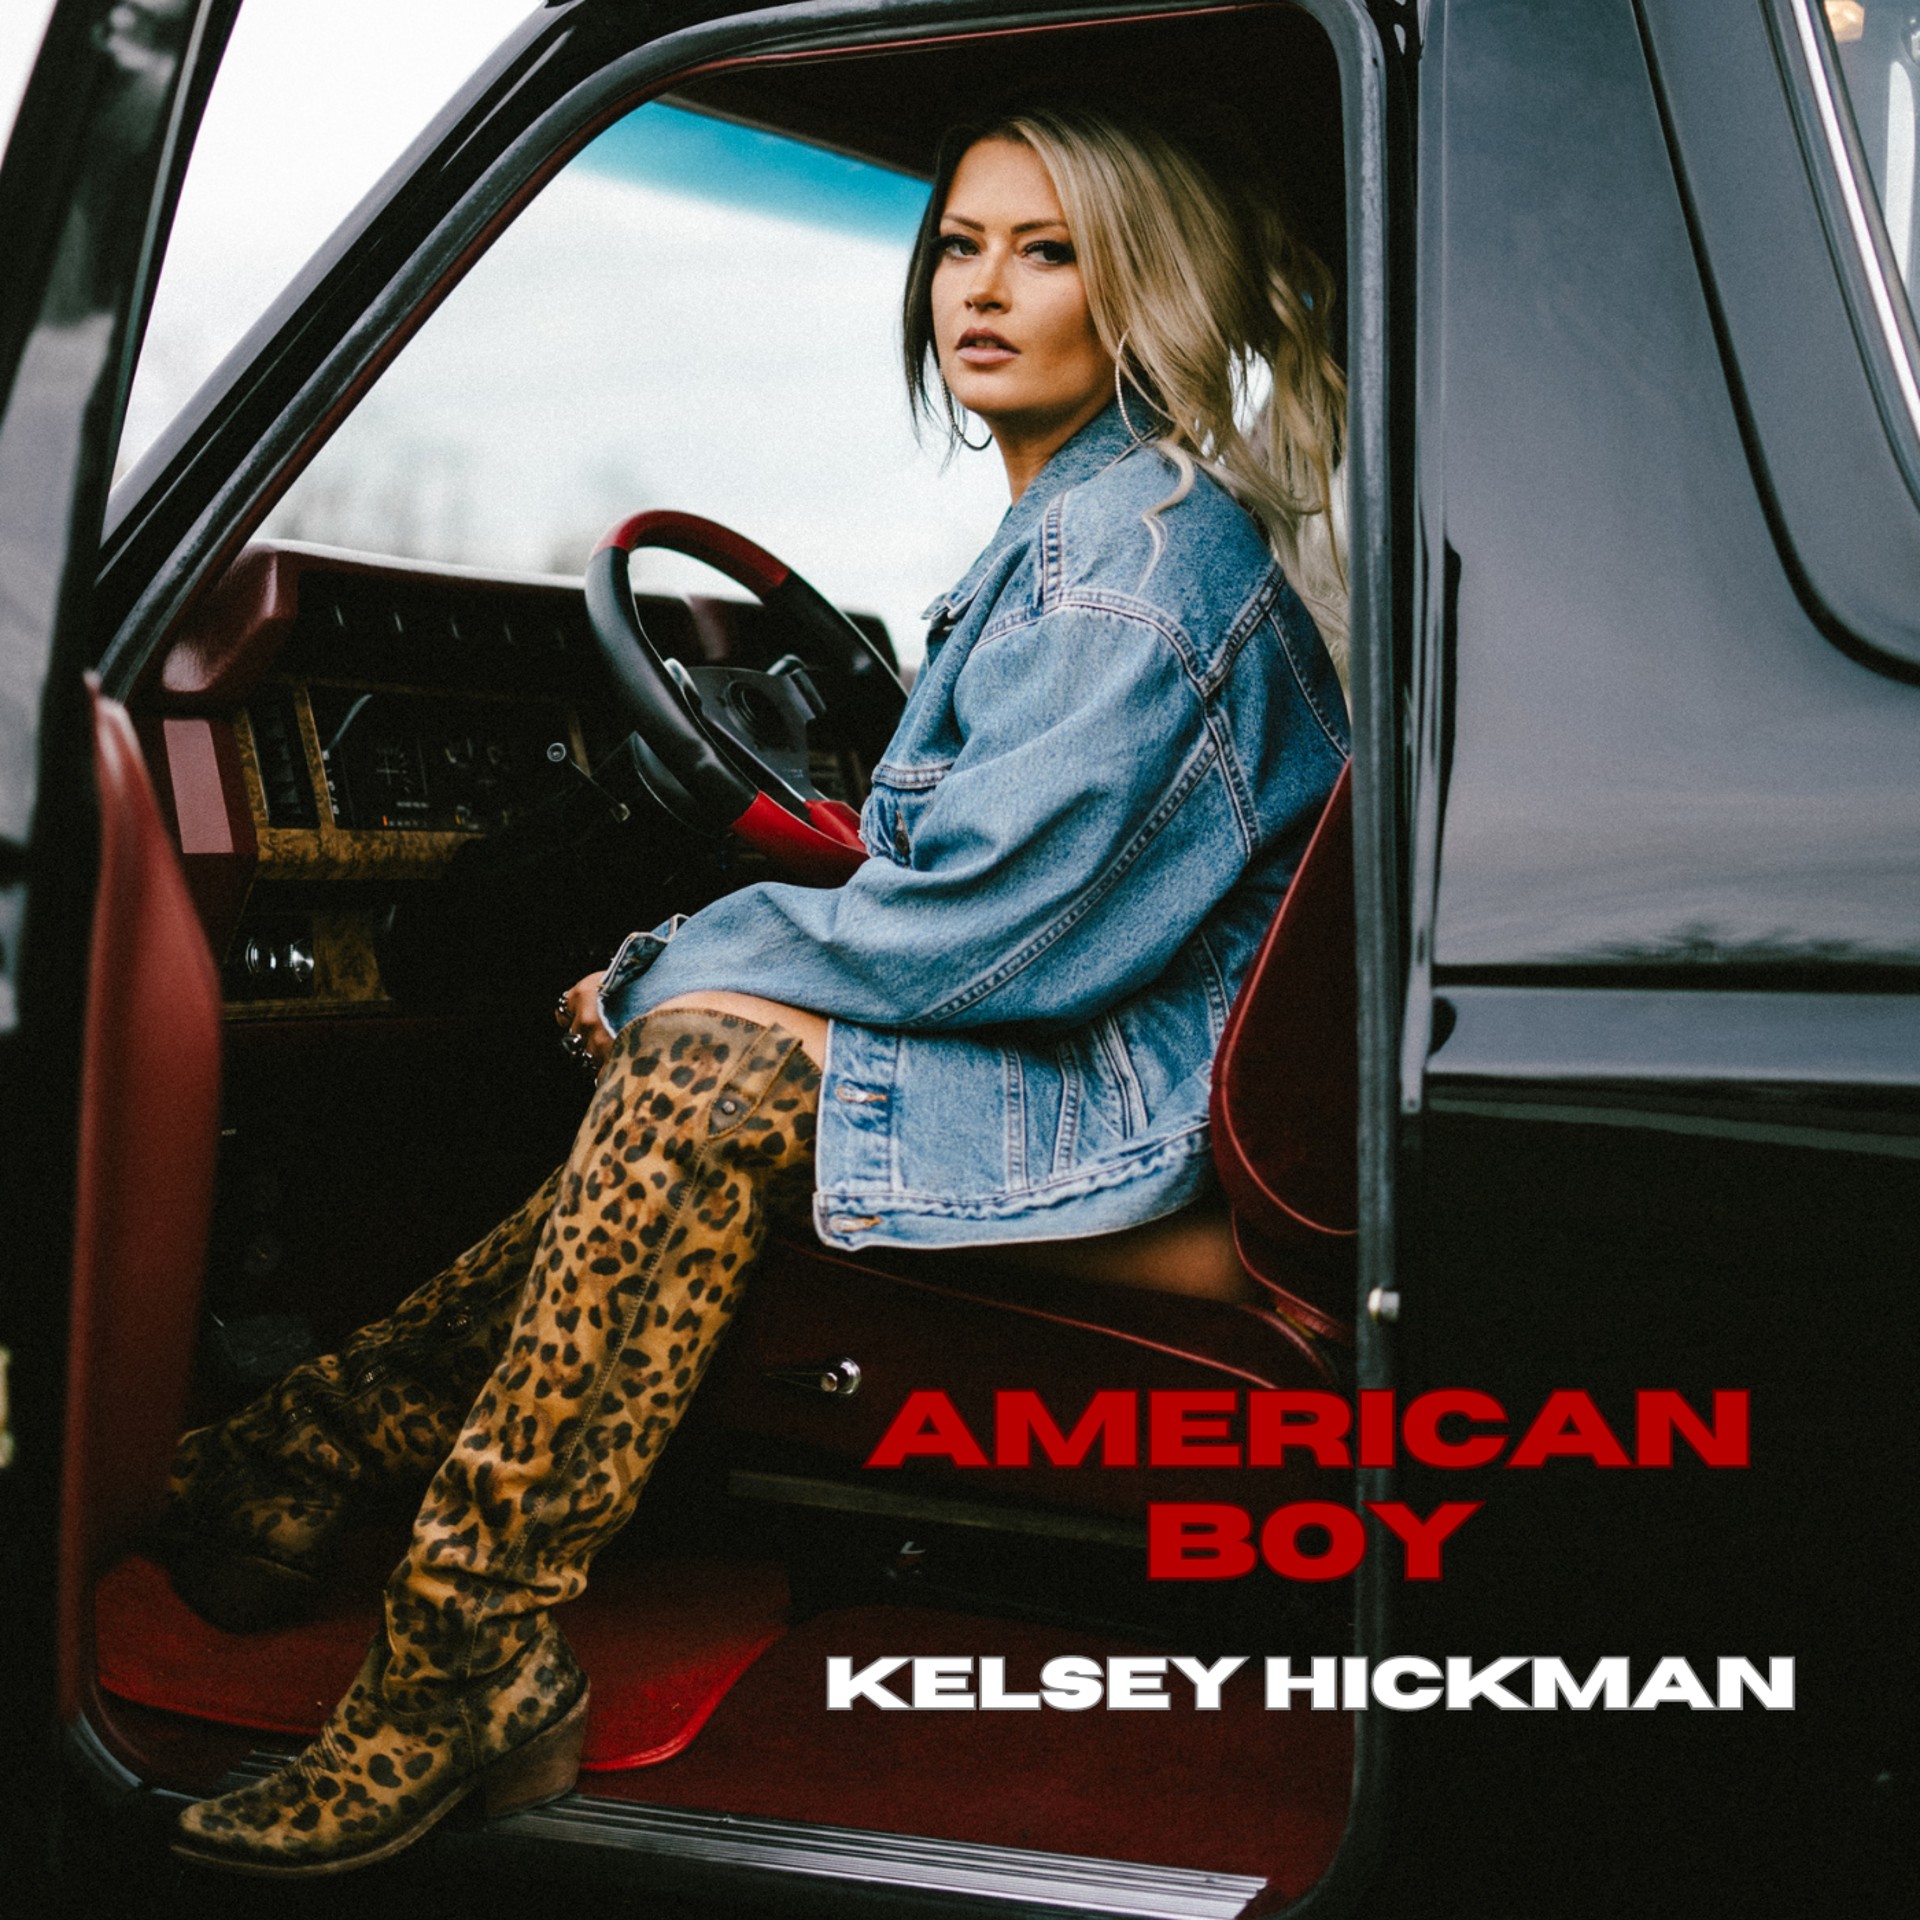 Kelsey Hickman “American Boy” single artwork